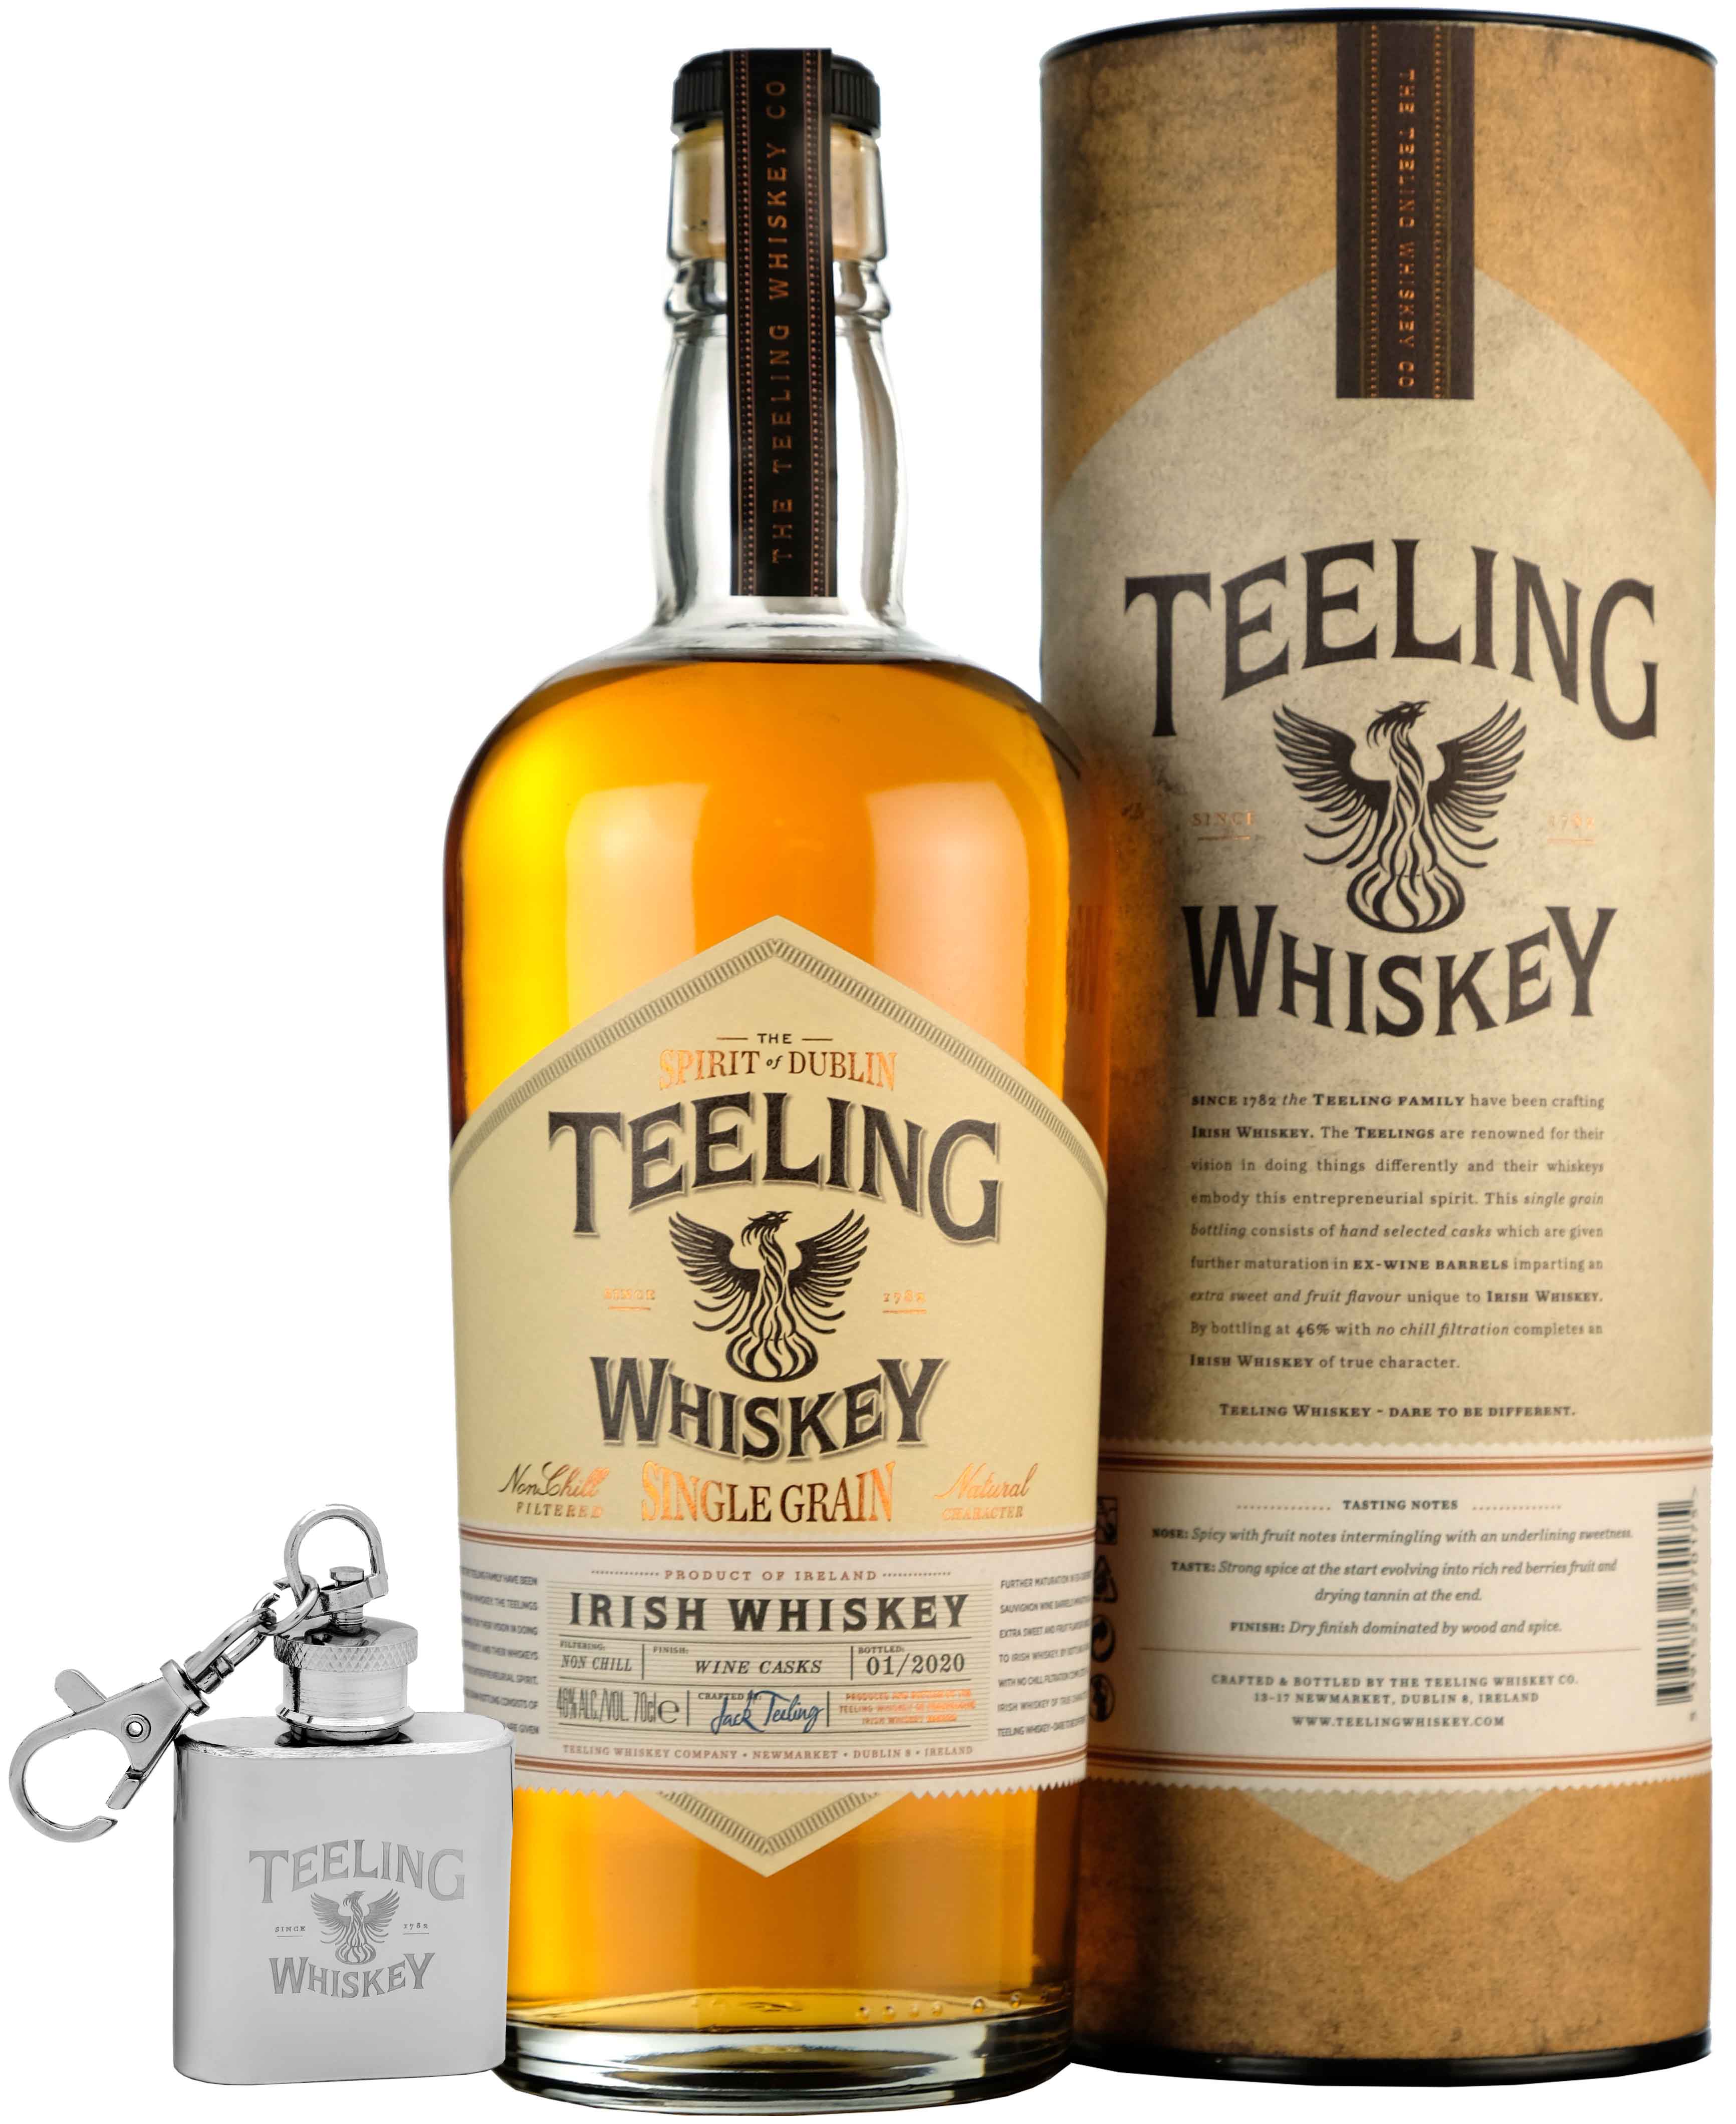 Teeling Single Malt Whiskey - Whisky from The Whisky World UK